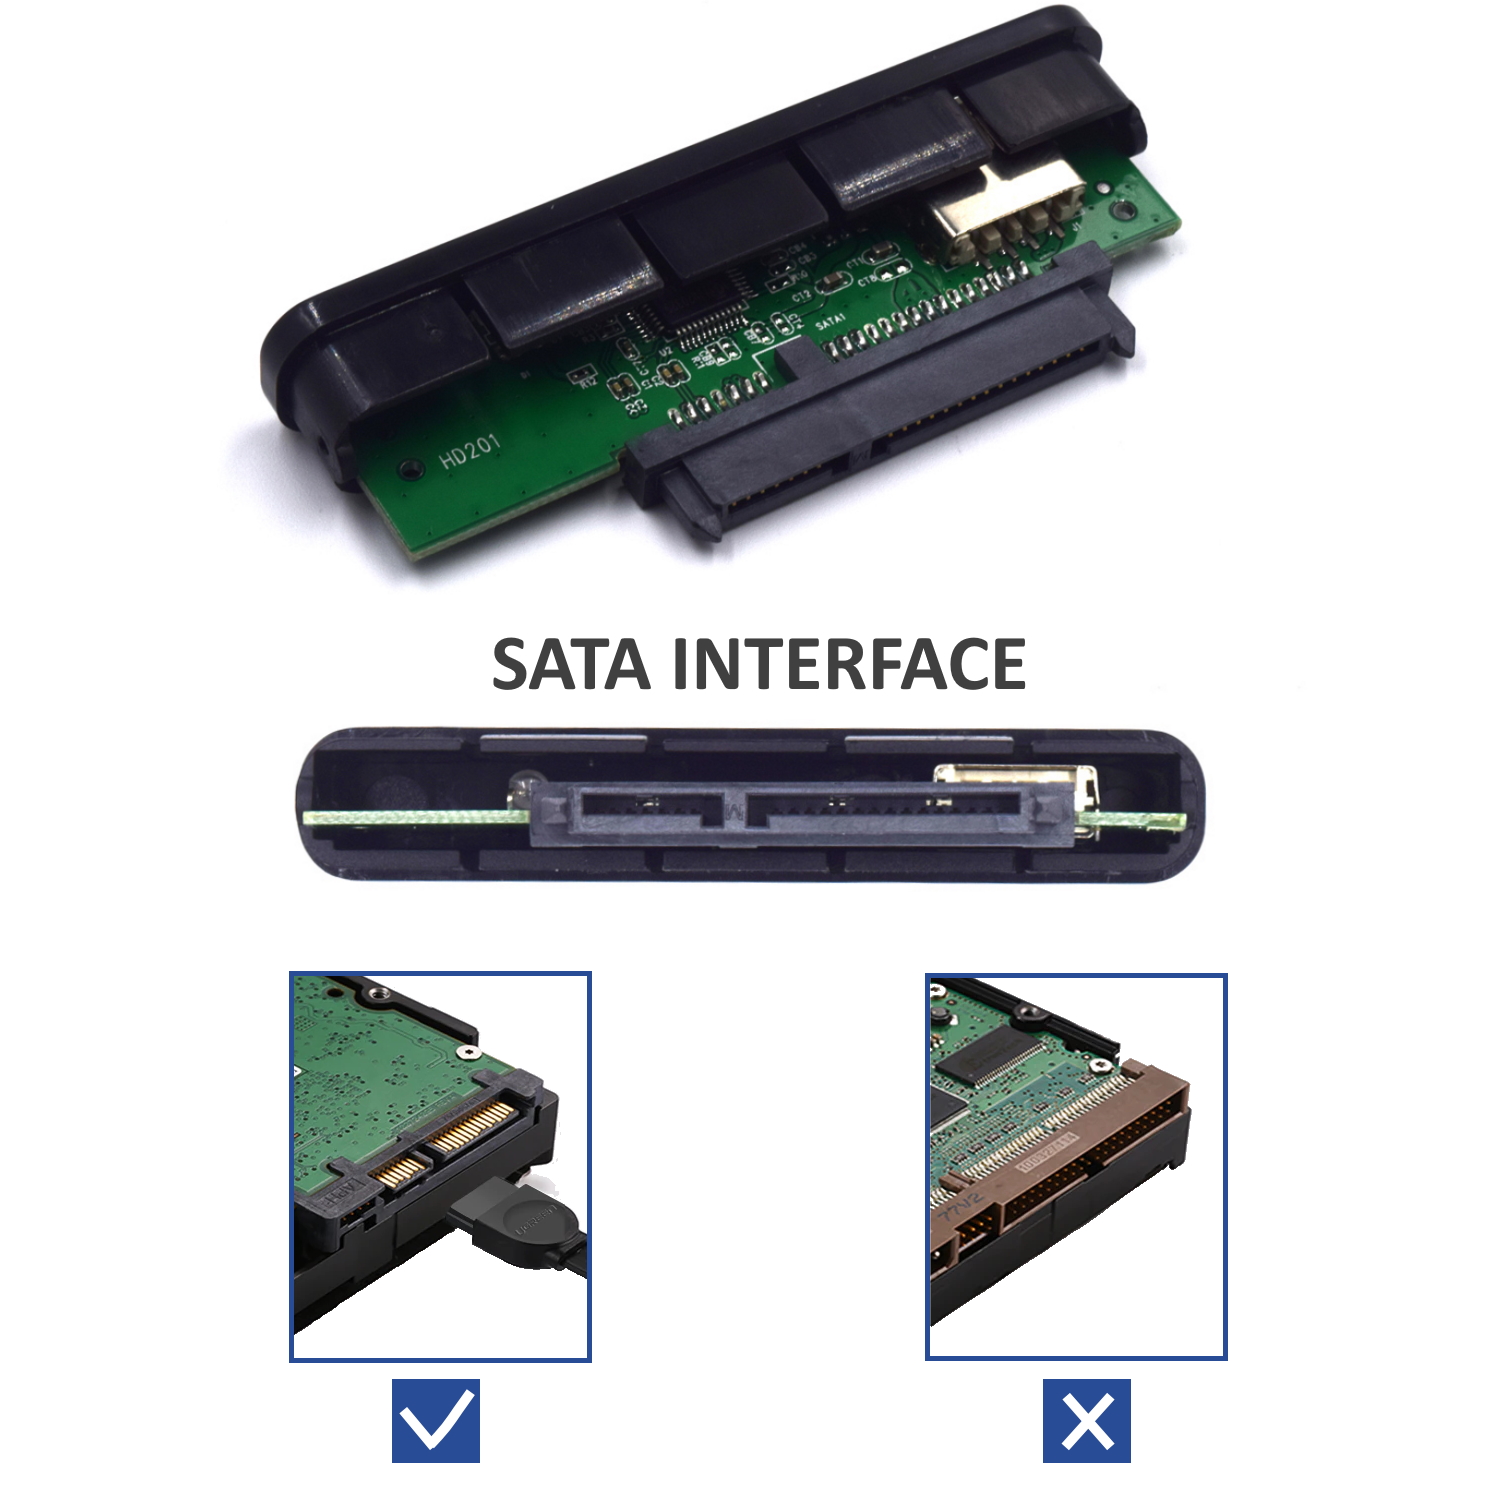 Ewent - Caixa HDD/SSD Ewent 2.5" SATA USB 2.0 Preto